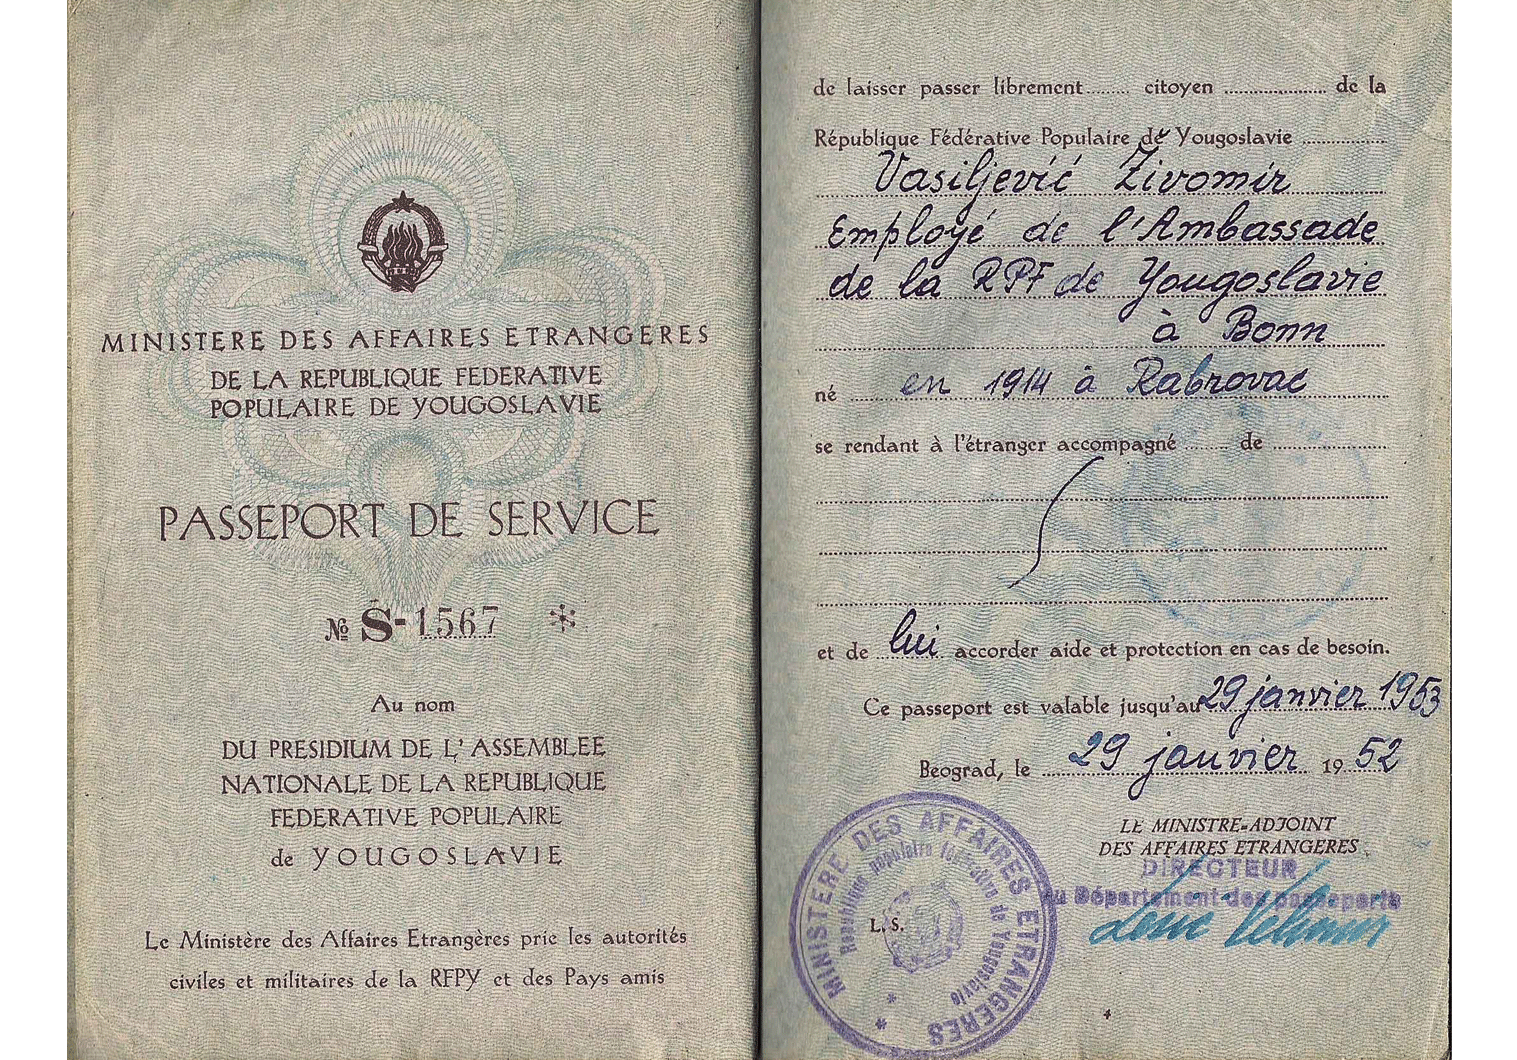 Cold-War service passport from 1952